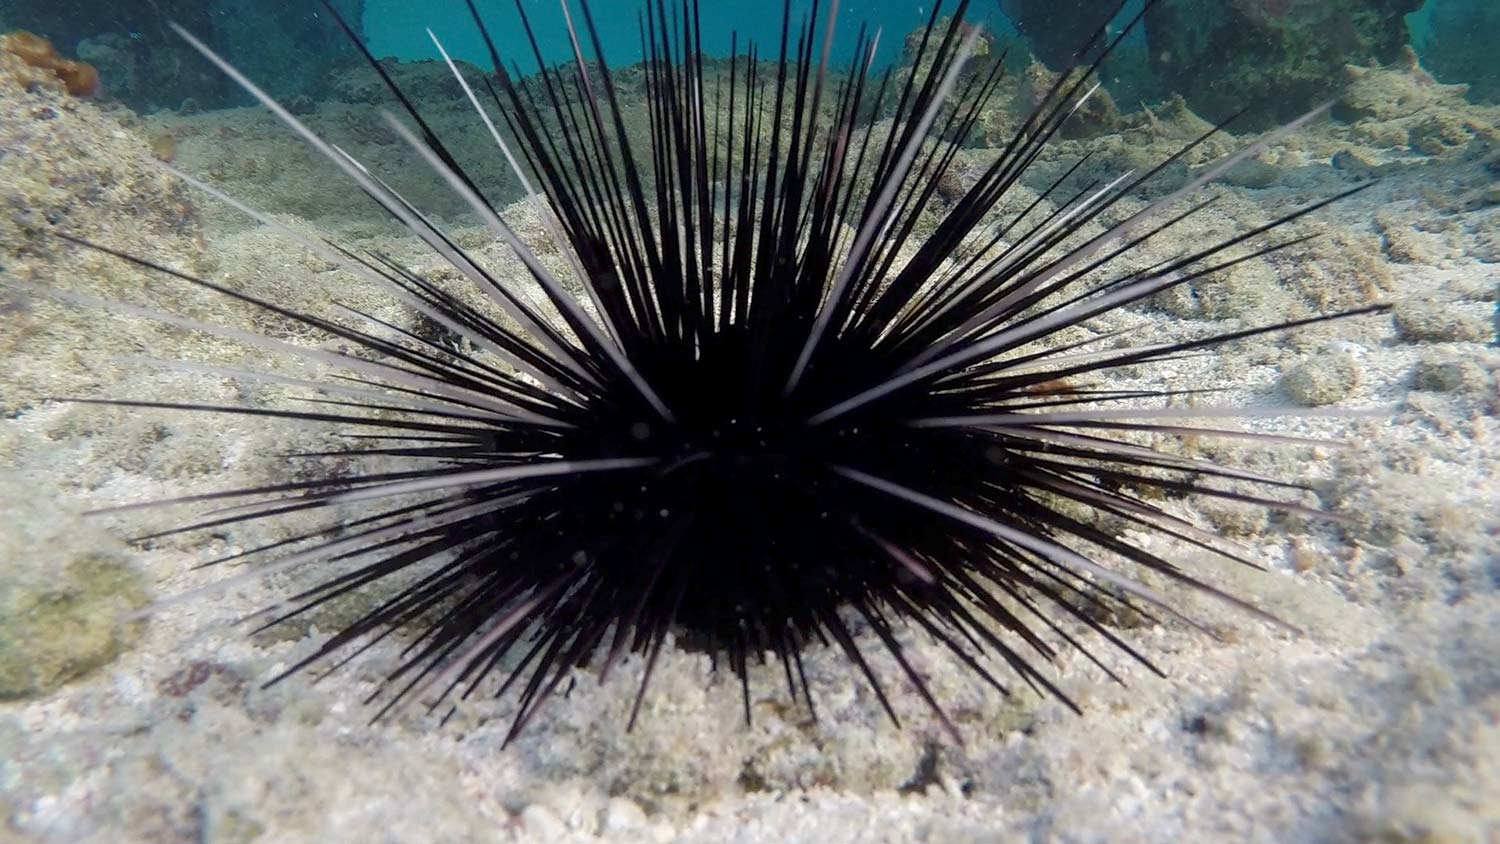 Tarama With Sea Urchin Coral, Buy Online